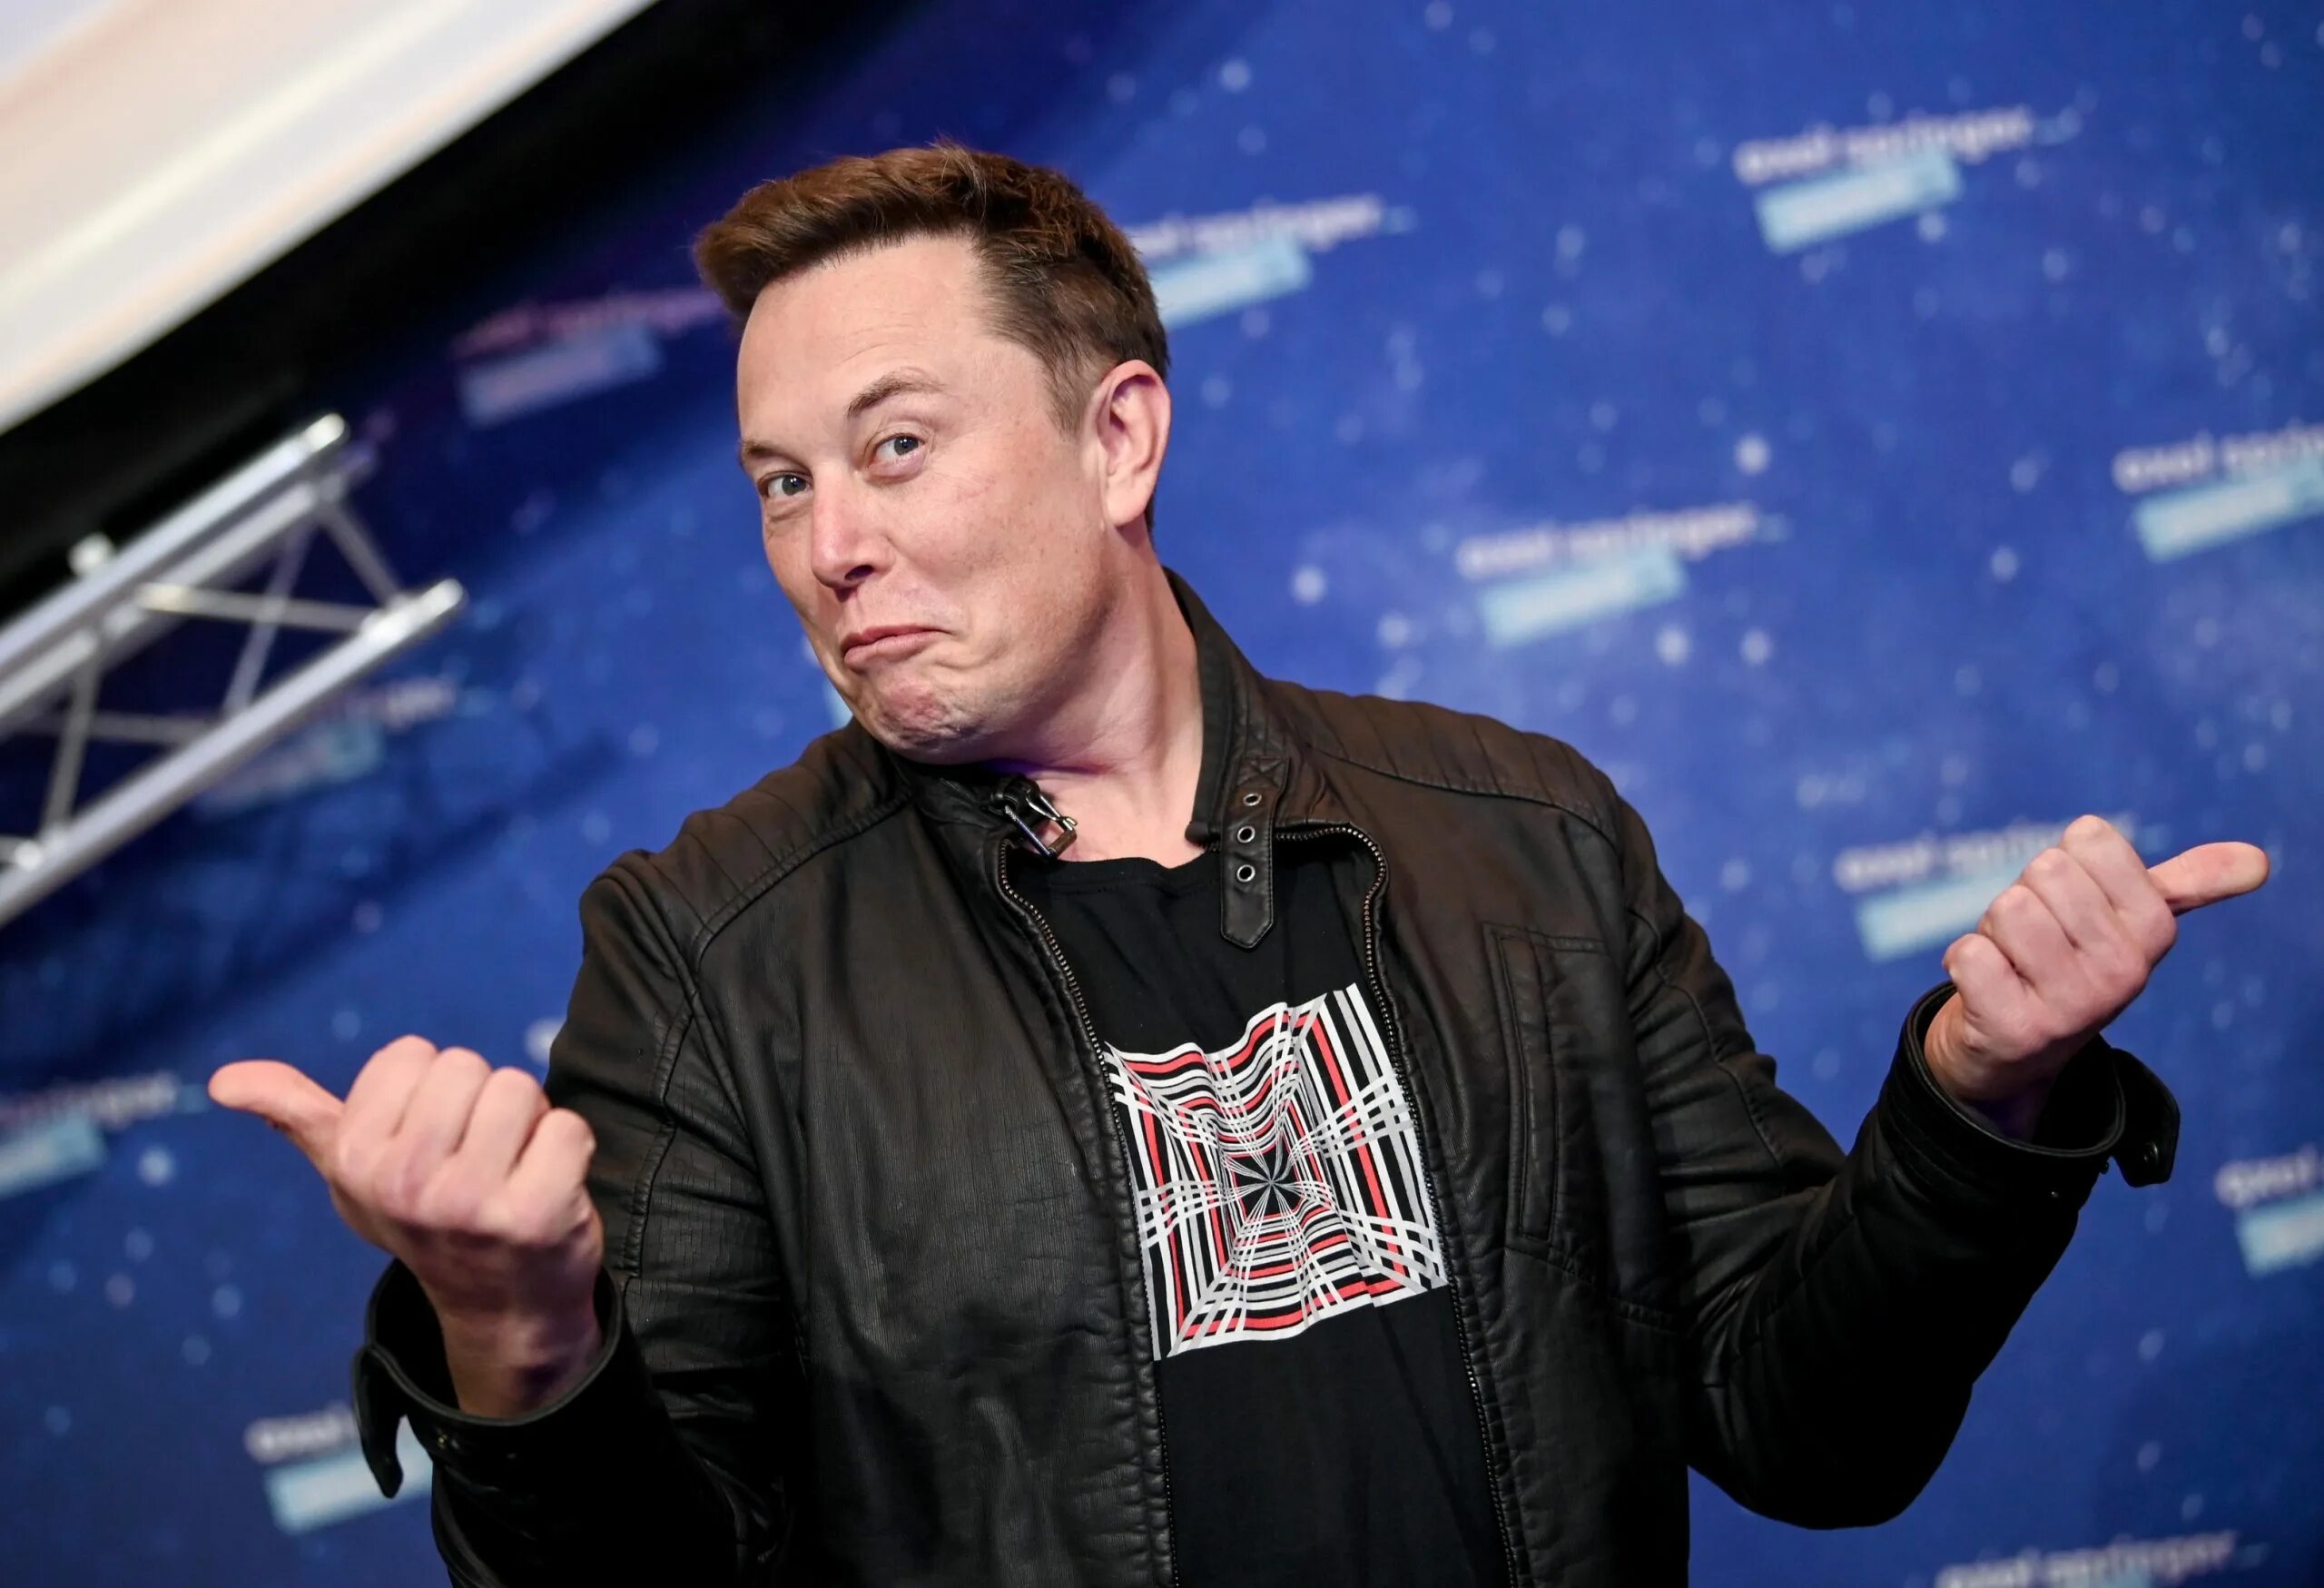 Илон Маск. Иланг Маск. Илон Маск (Elon Musk). Elon Musk фото. Биография элона маска